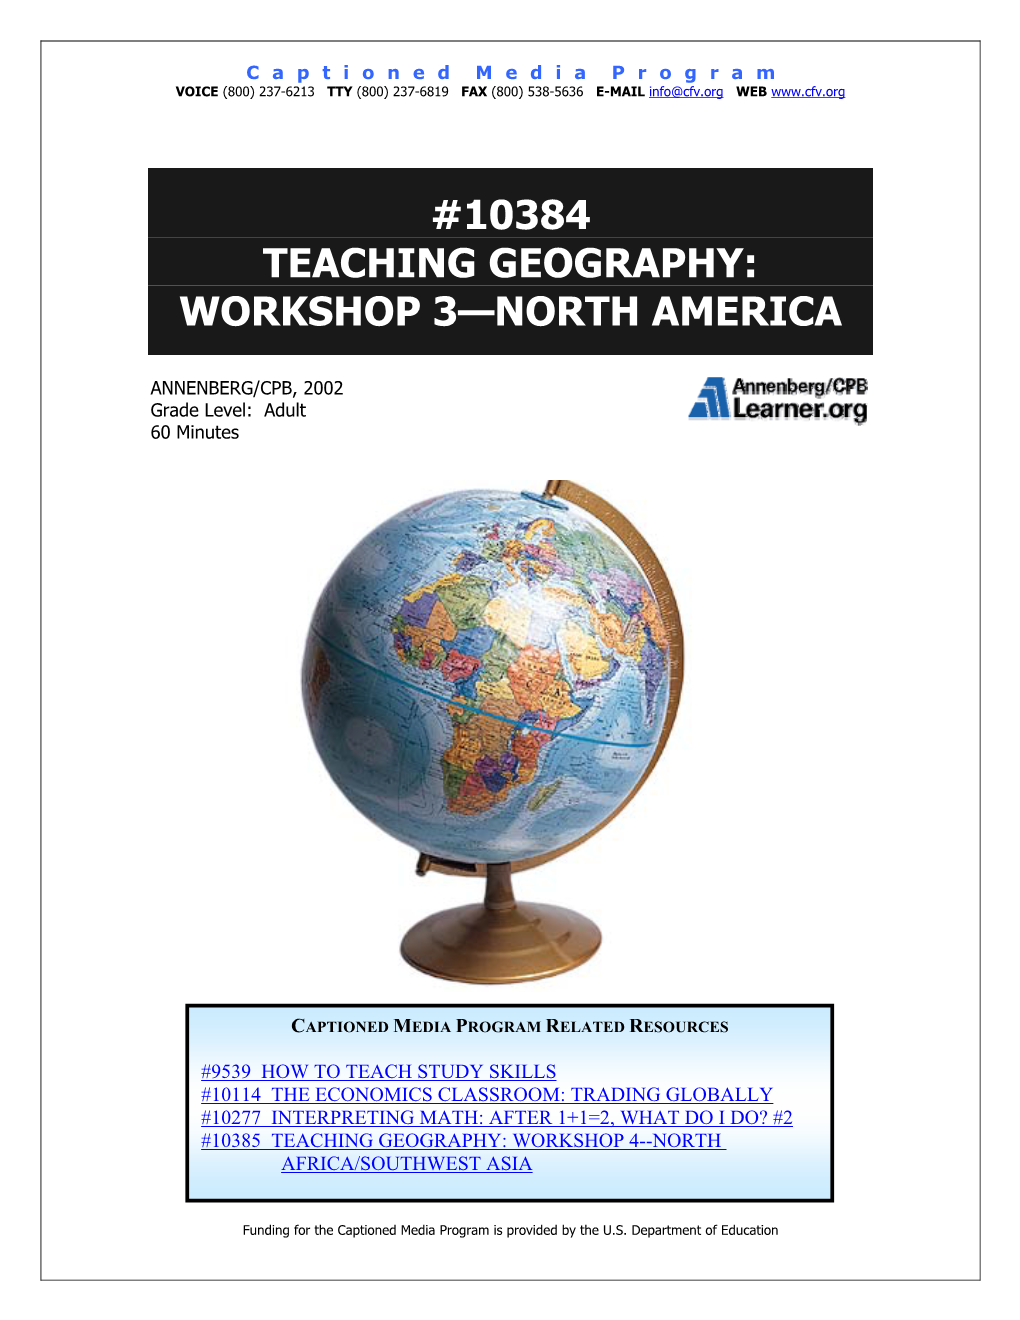 10384 Teaching Geography: Workshop 3-North America